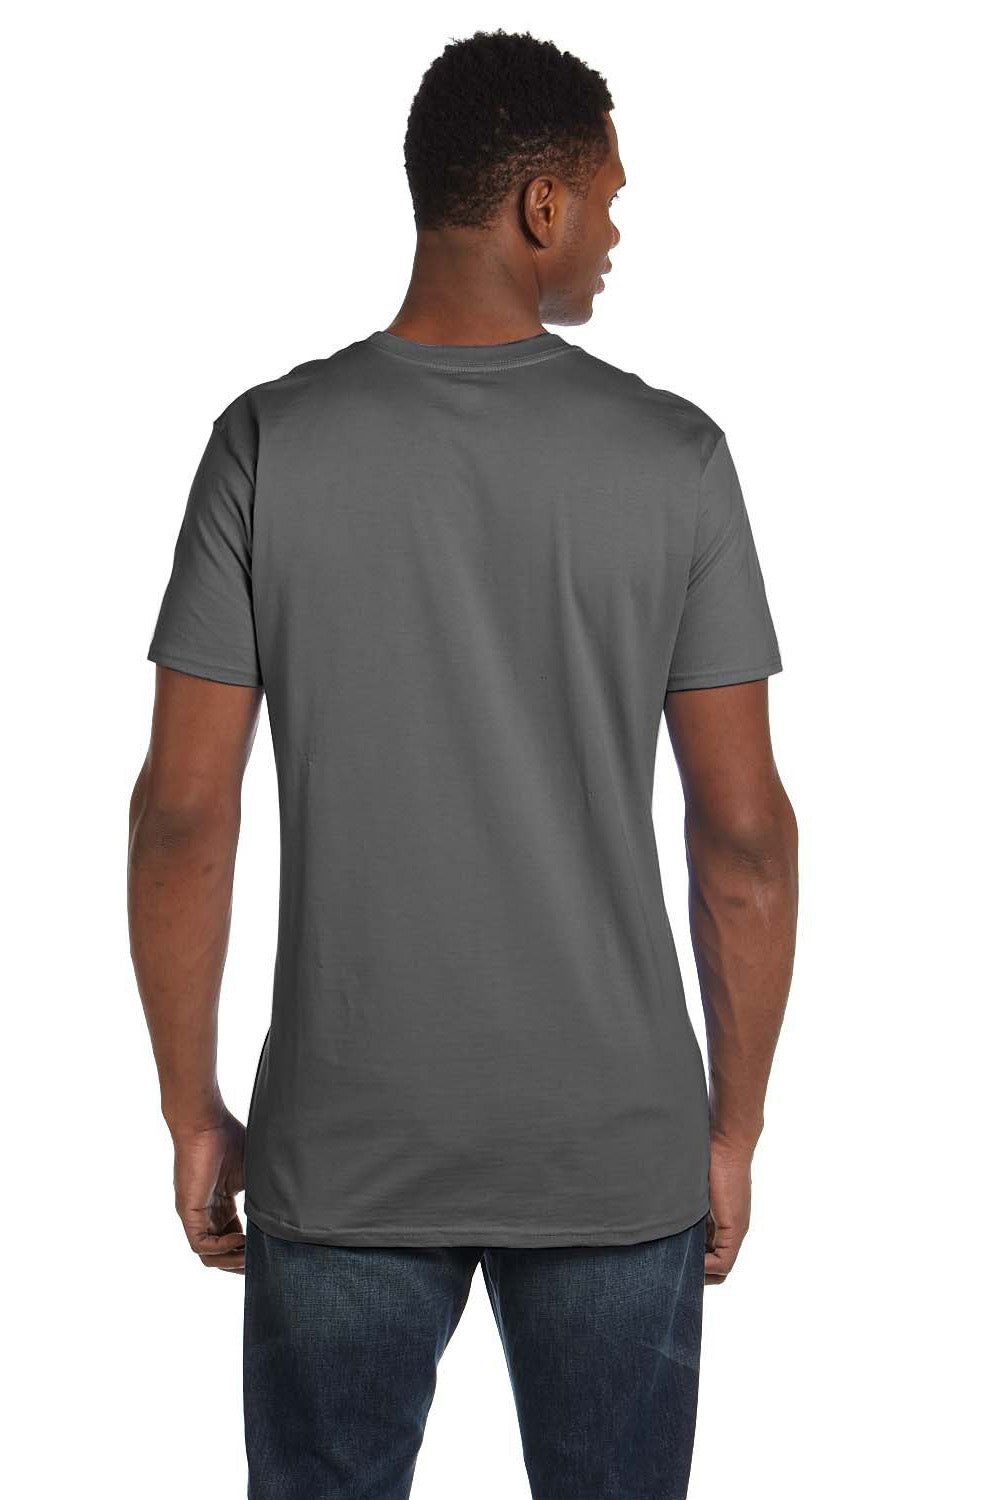 Hanes 498PT Mens Perfect-T PreTreat Short Sleeve Crewneck T-Shirt Smoke Grey Back